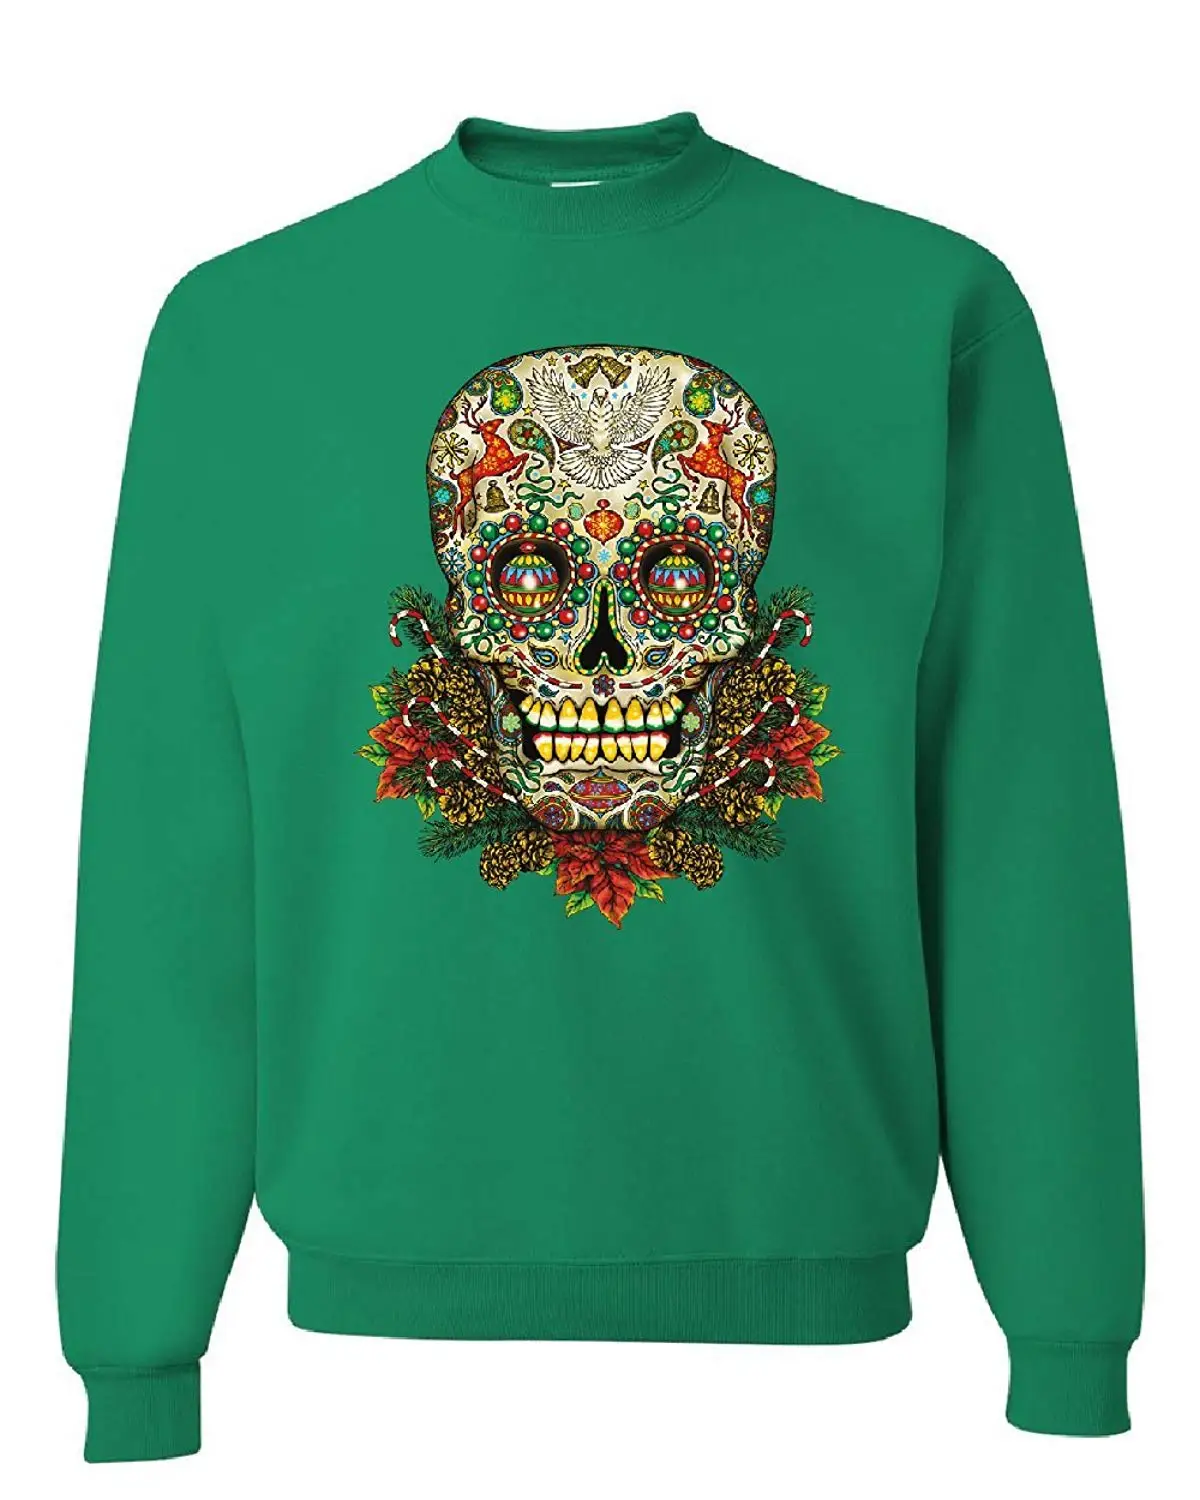 Hipster Skull And Crossbones Green Adult T-Shirt